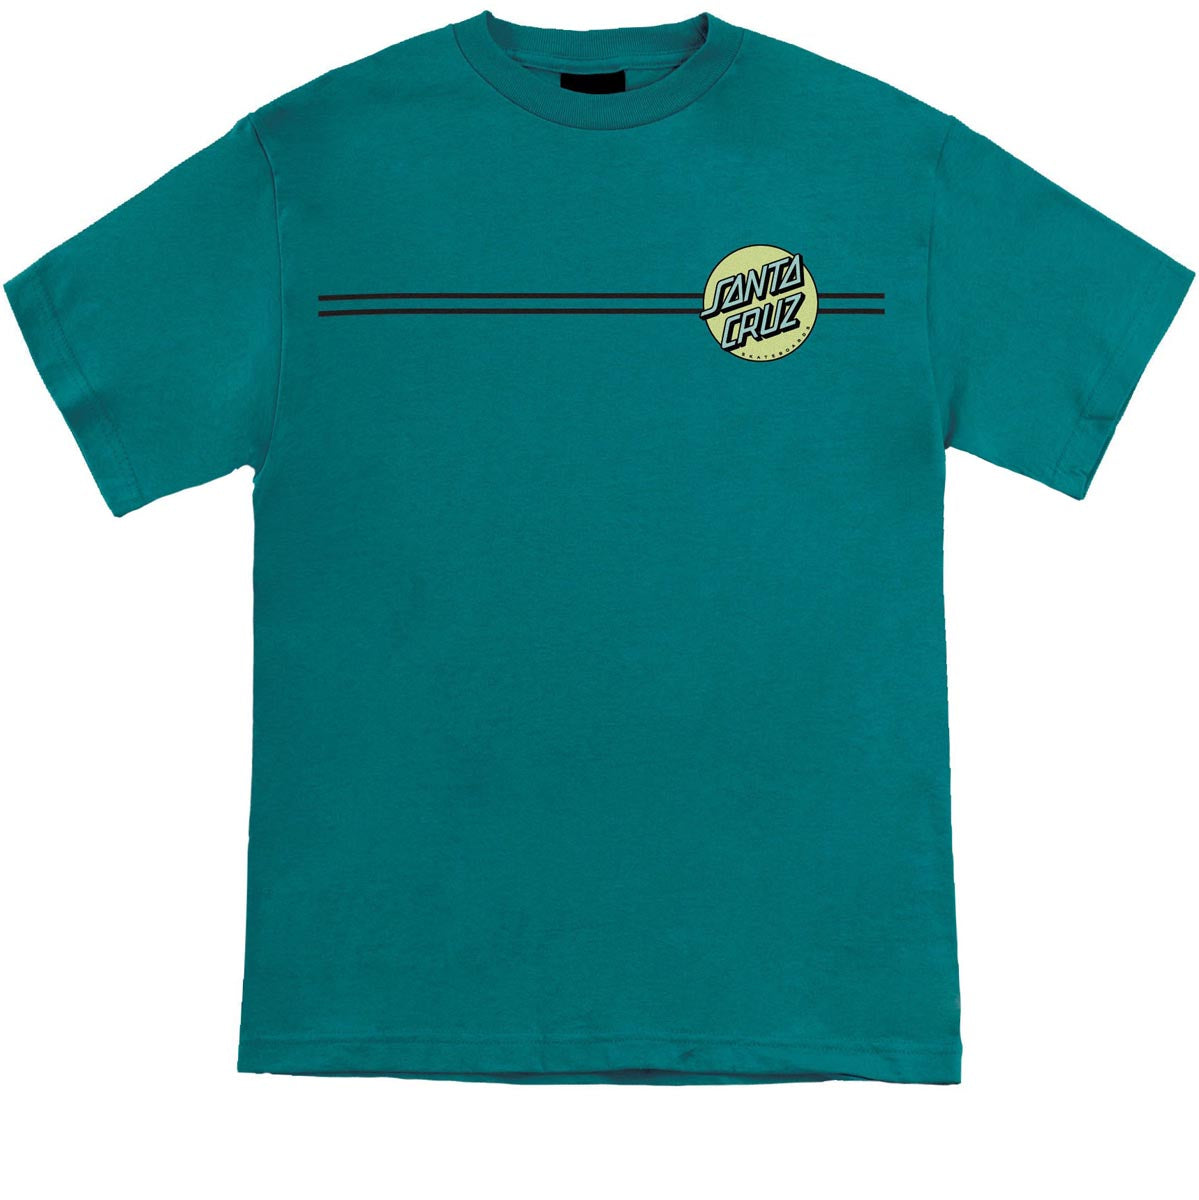 Santa Cruz Other Dot T-Shirt - Teal/Lime image 1